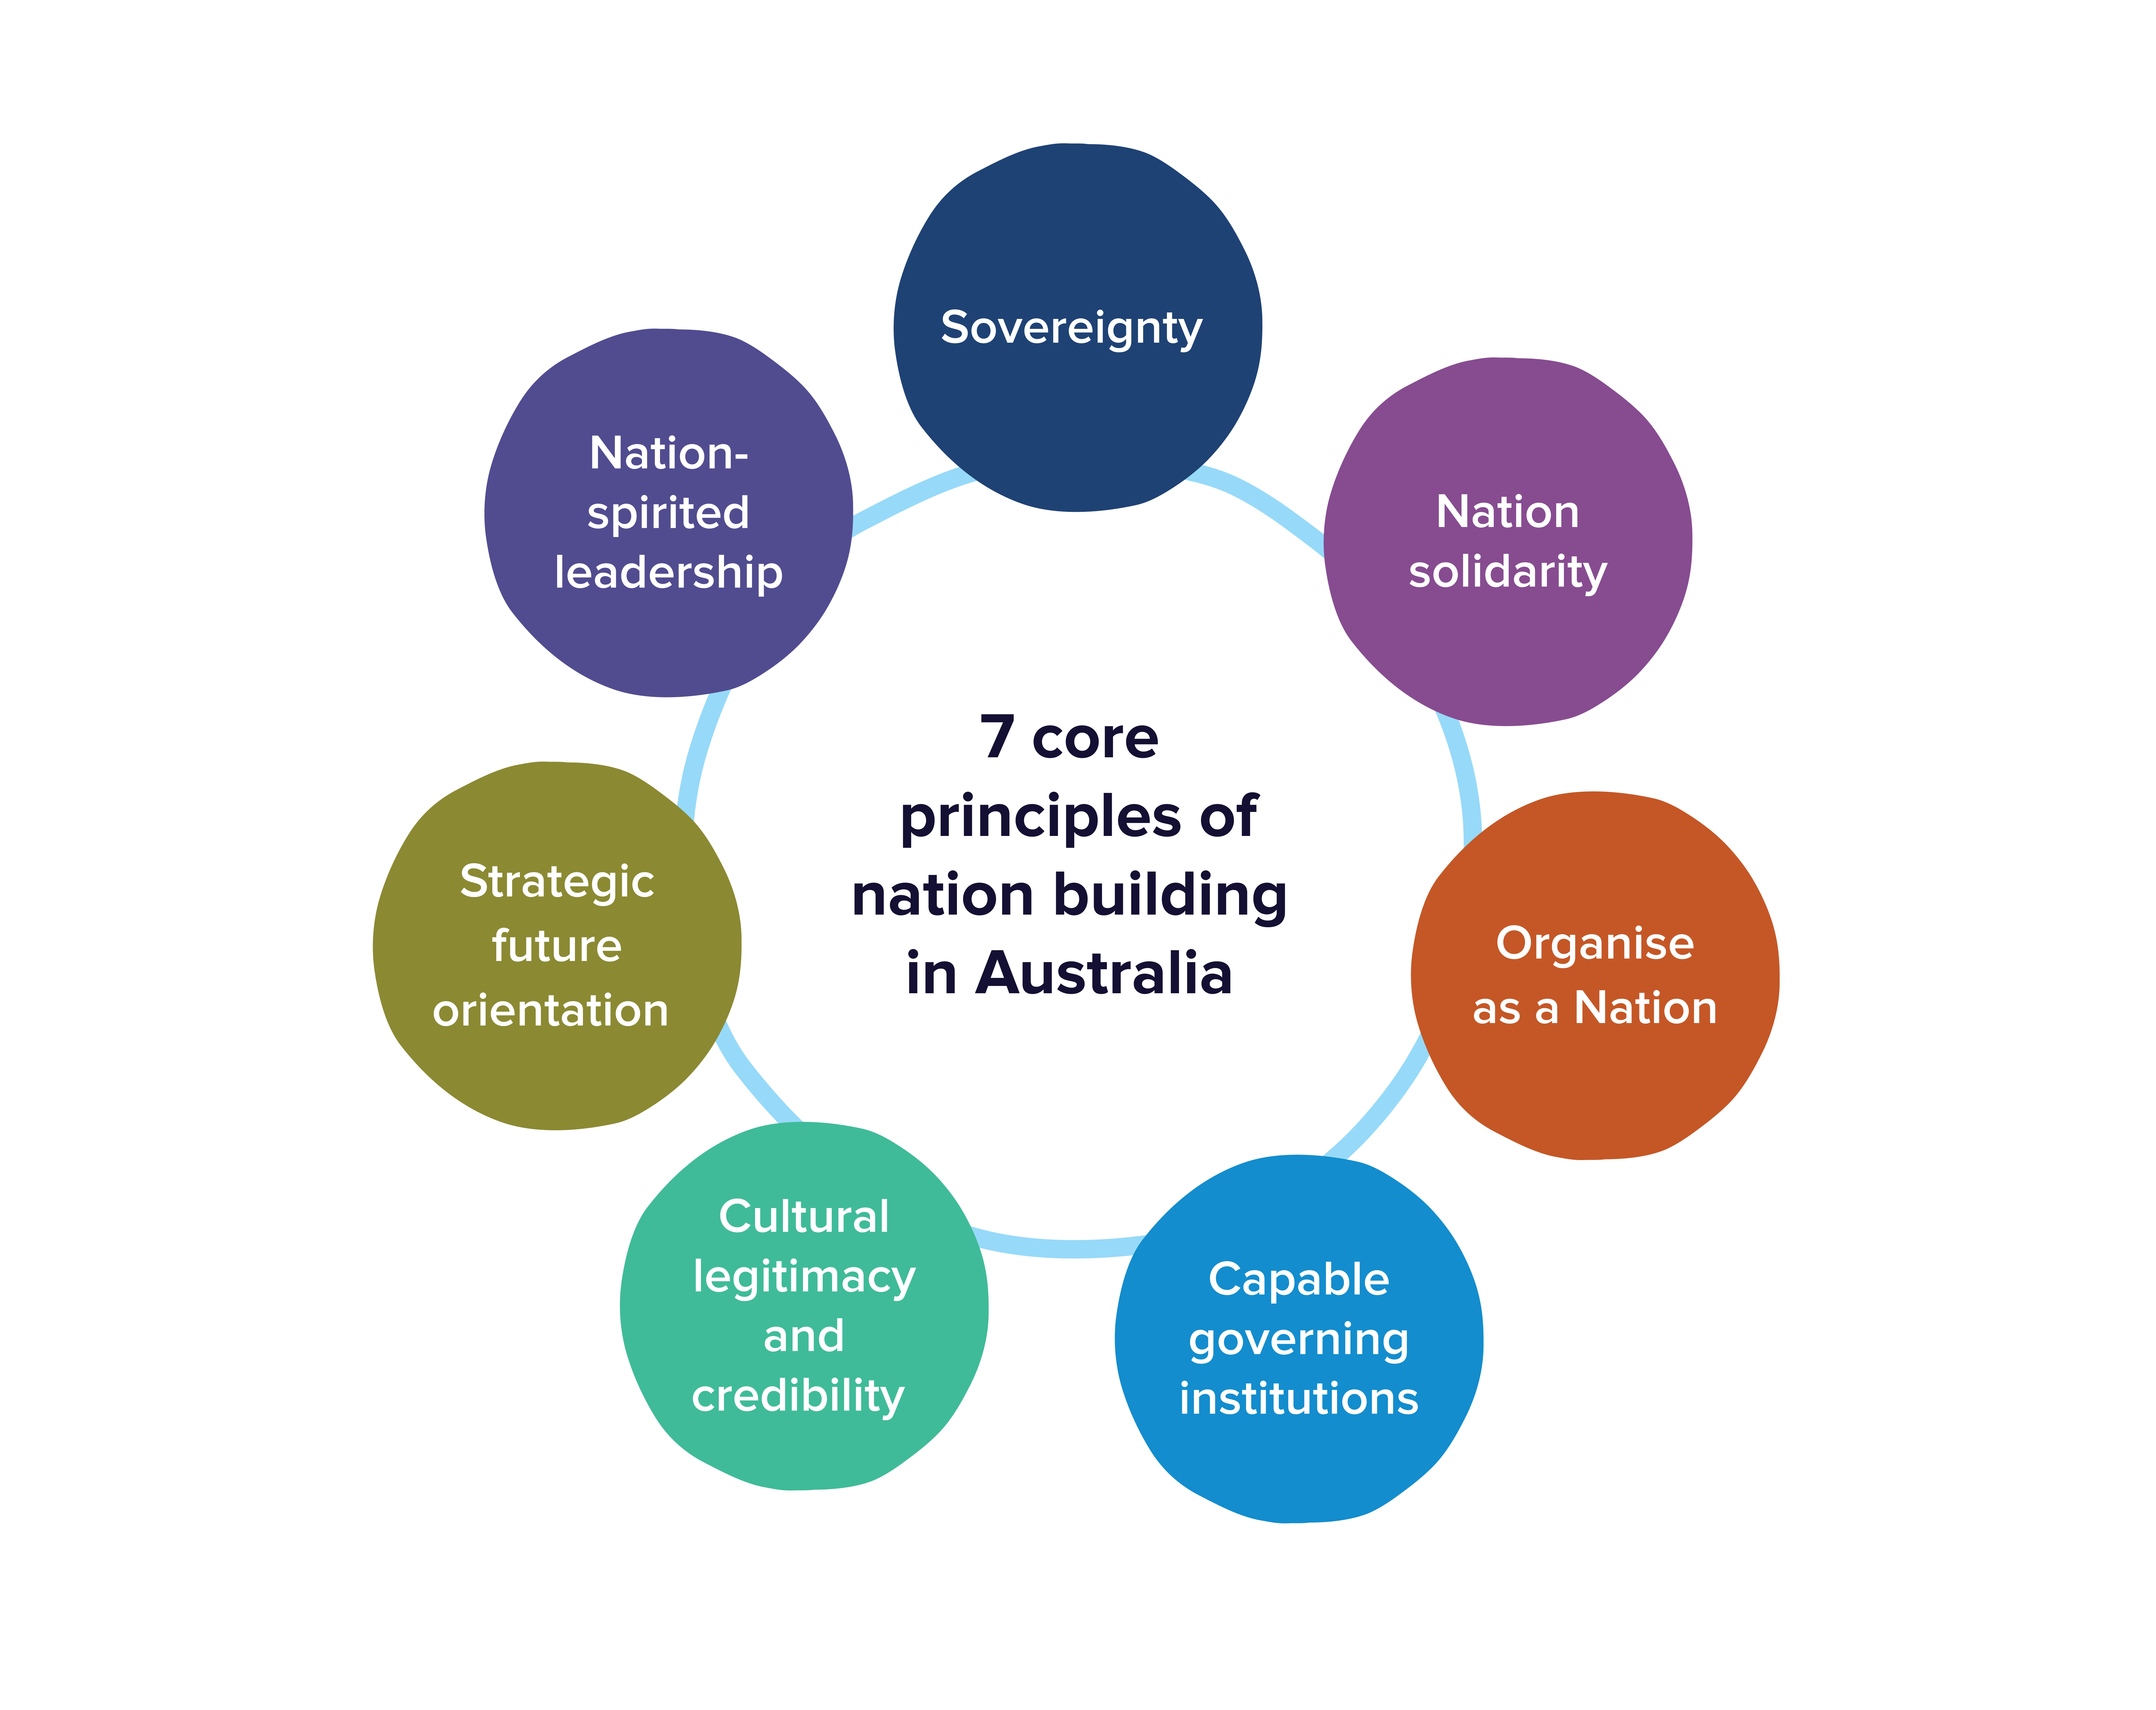 Core principles of nation building in Australia